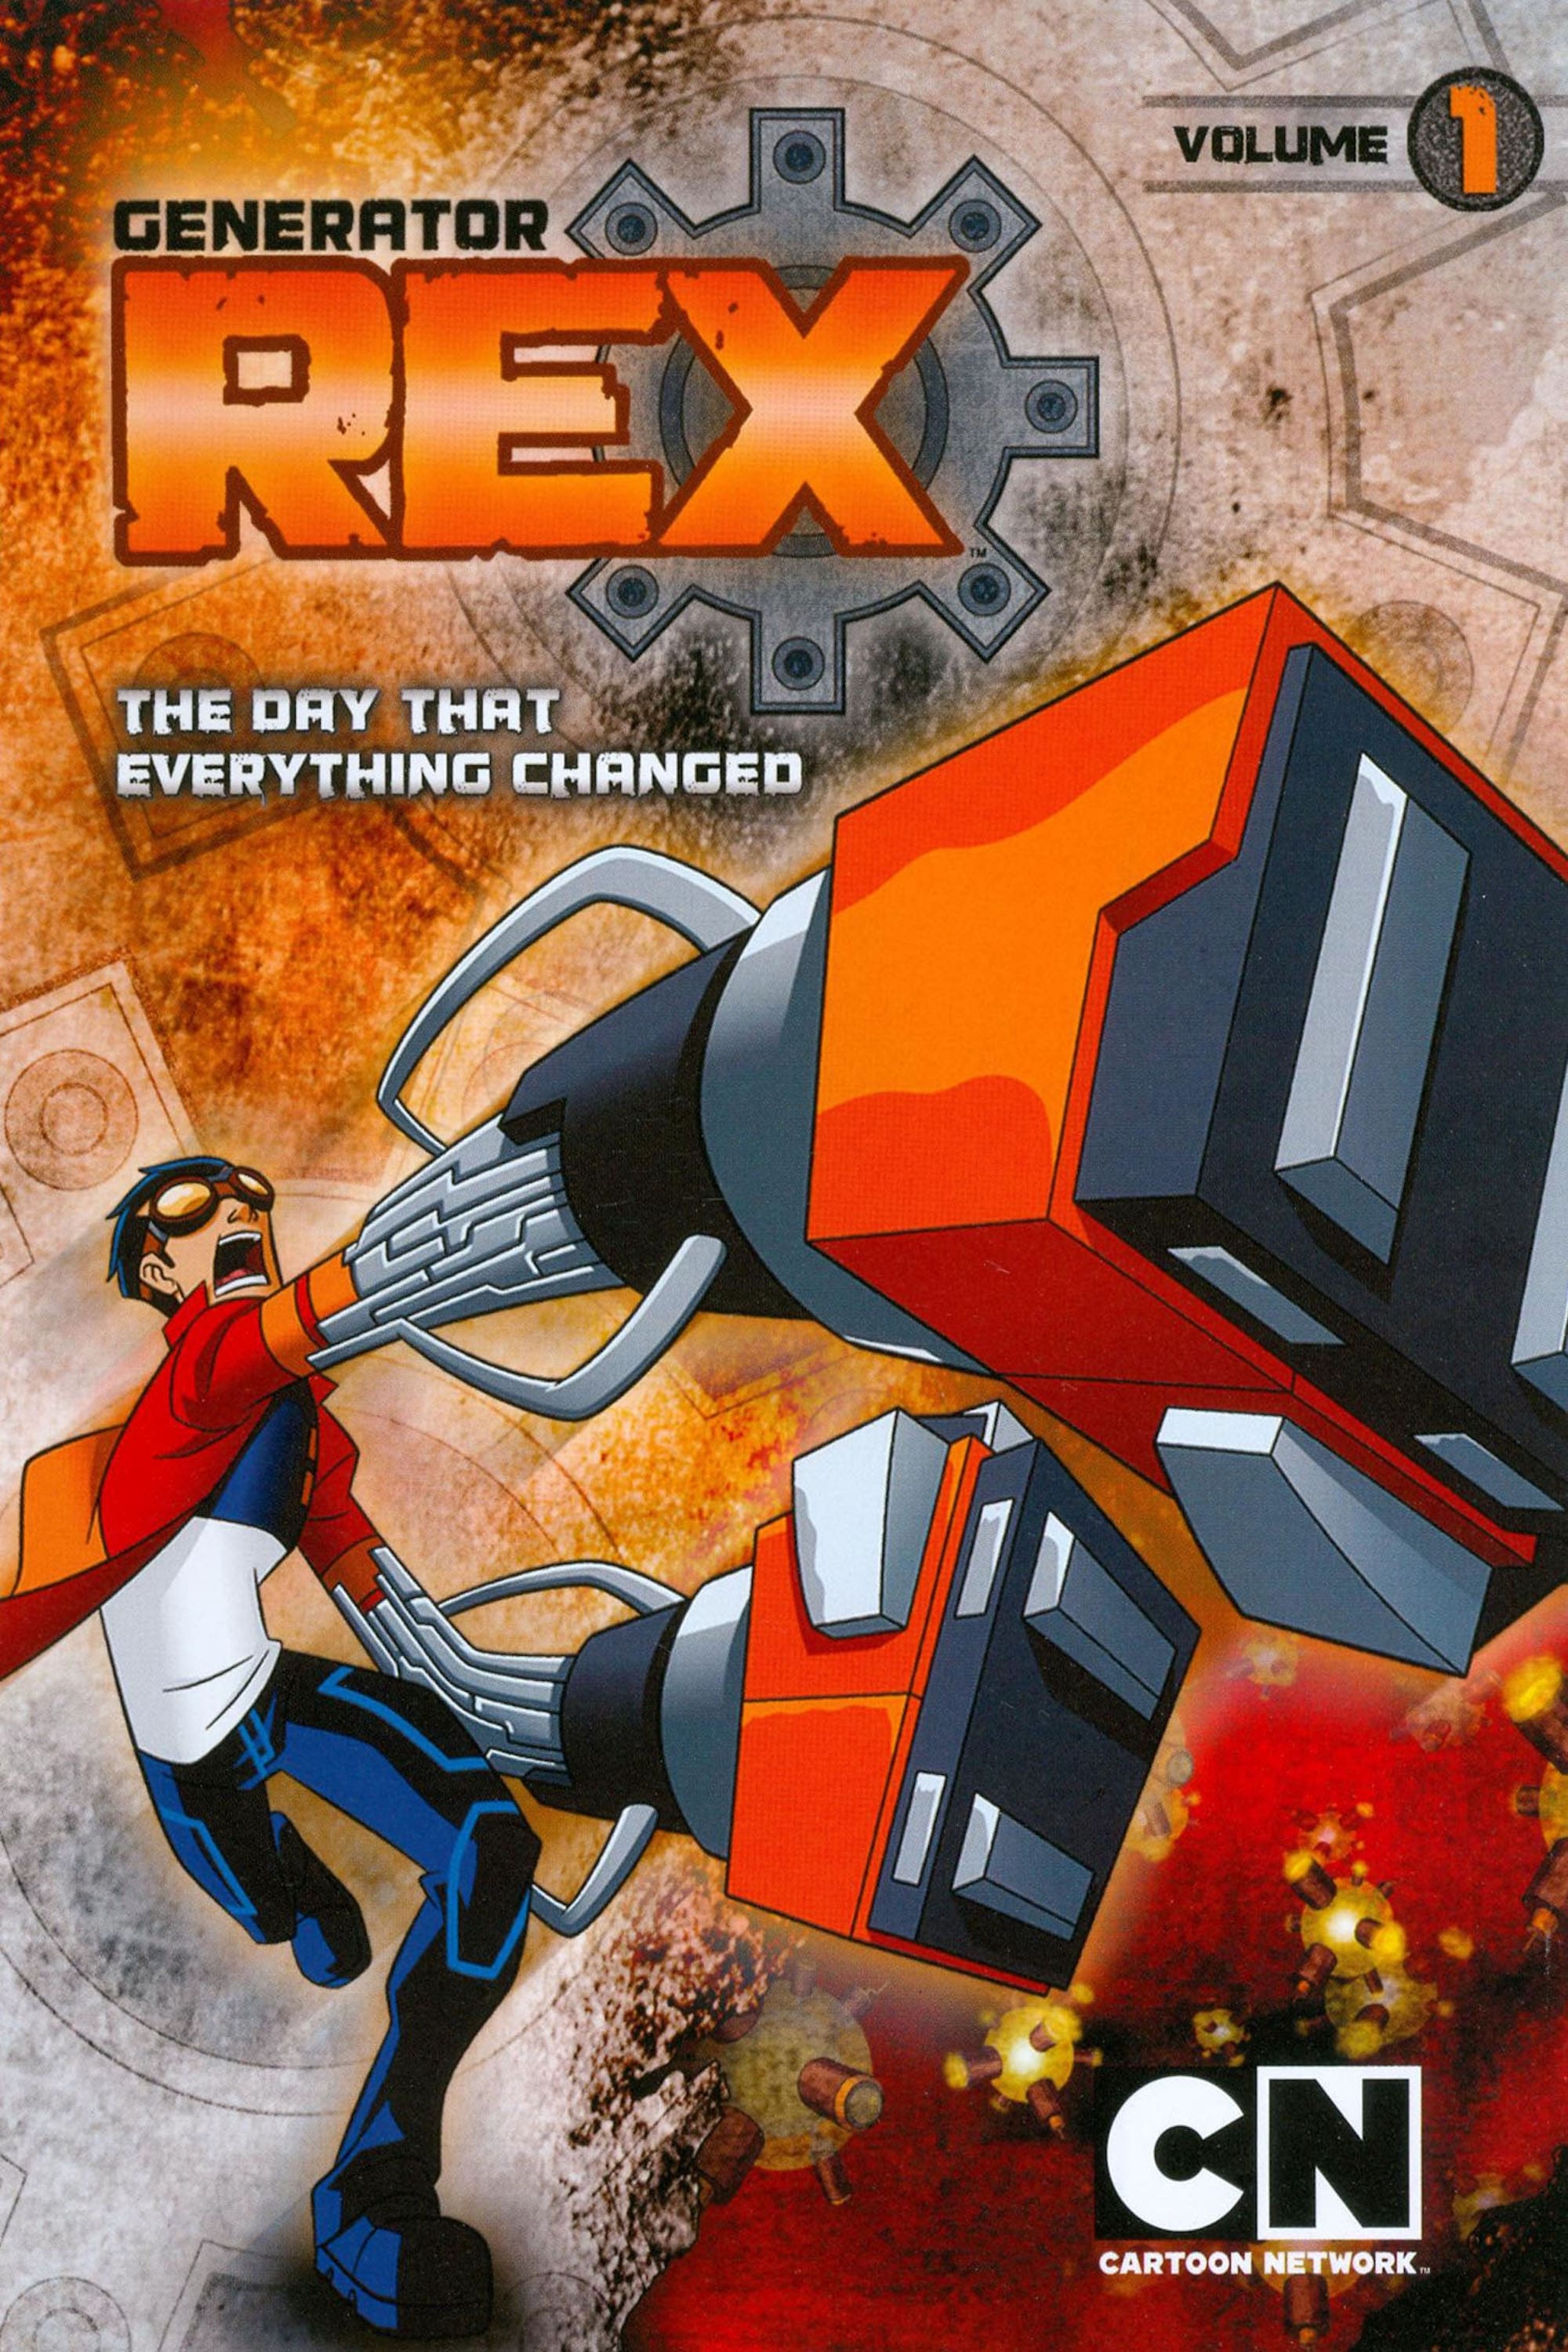 Watch Generator Rex · Season 2 Episode 1 · Rampage Full Episode Online -  Plex